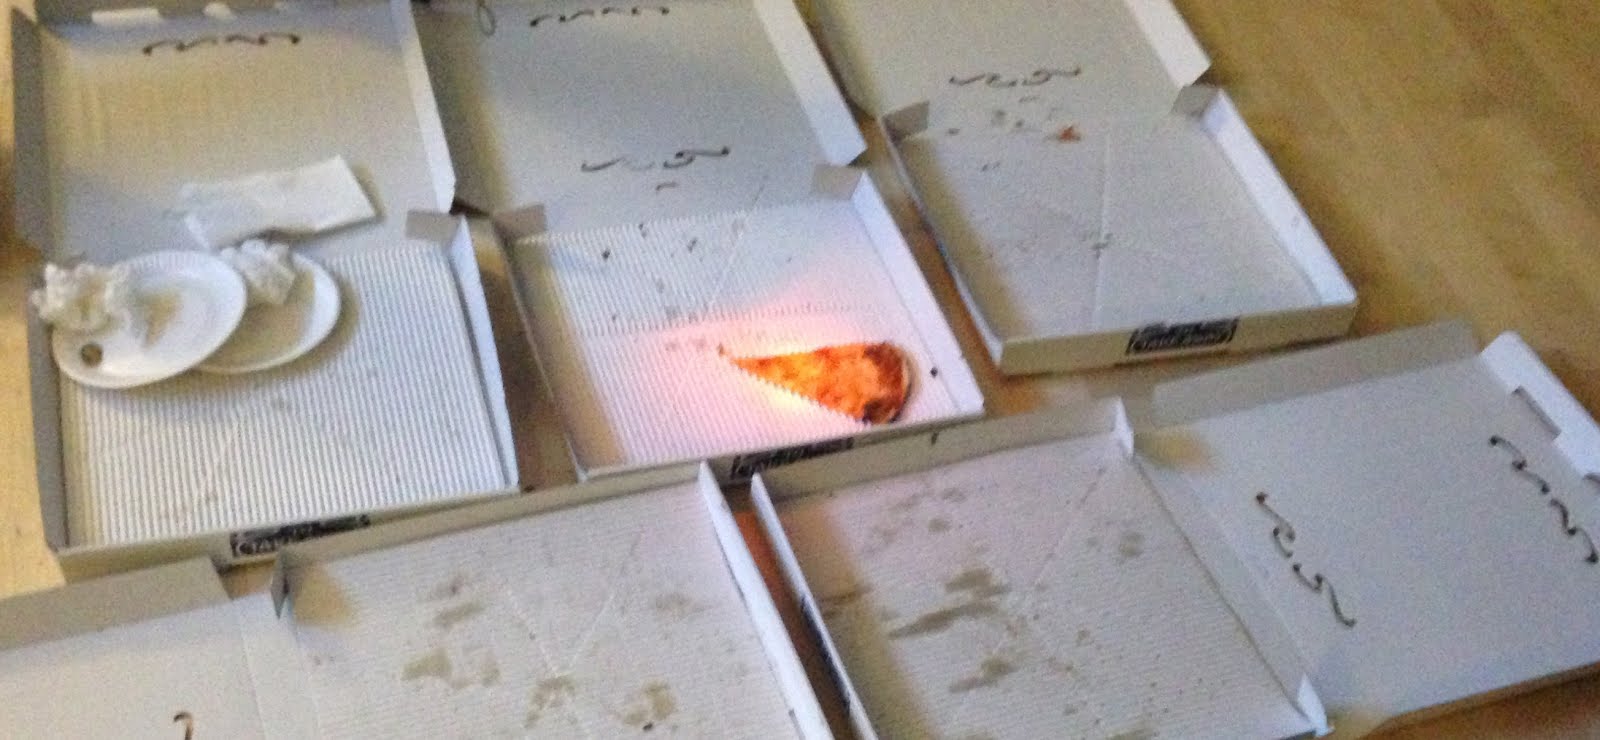 the last slice of pizza